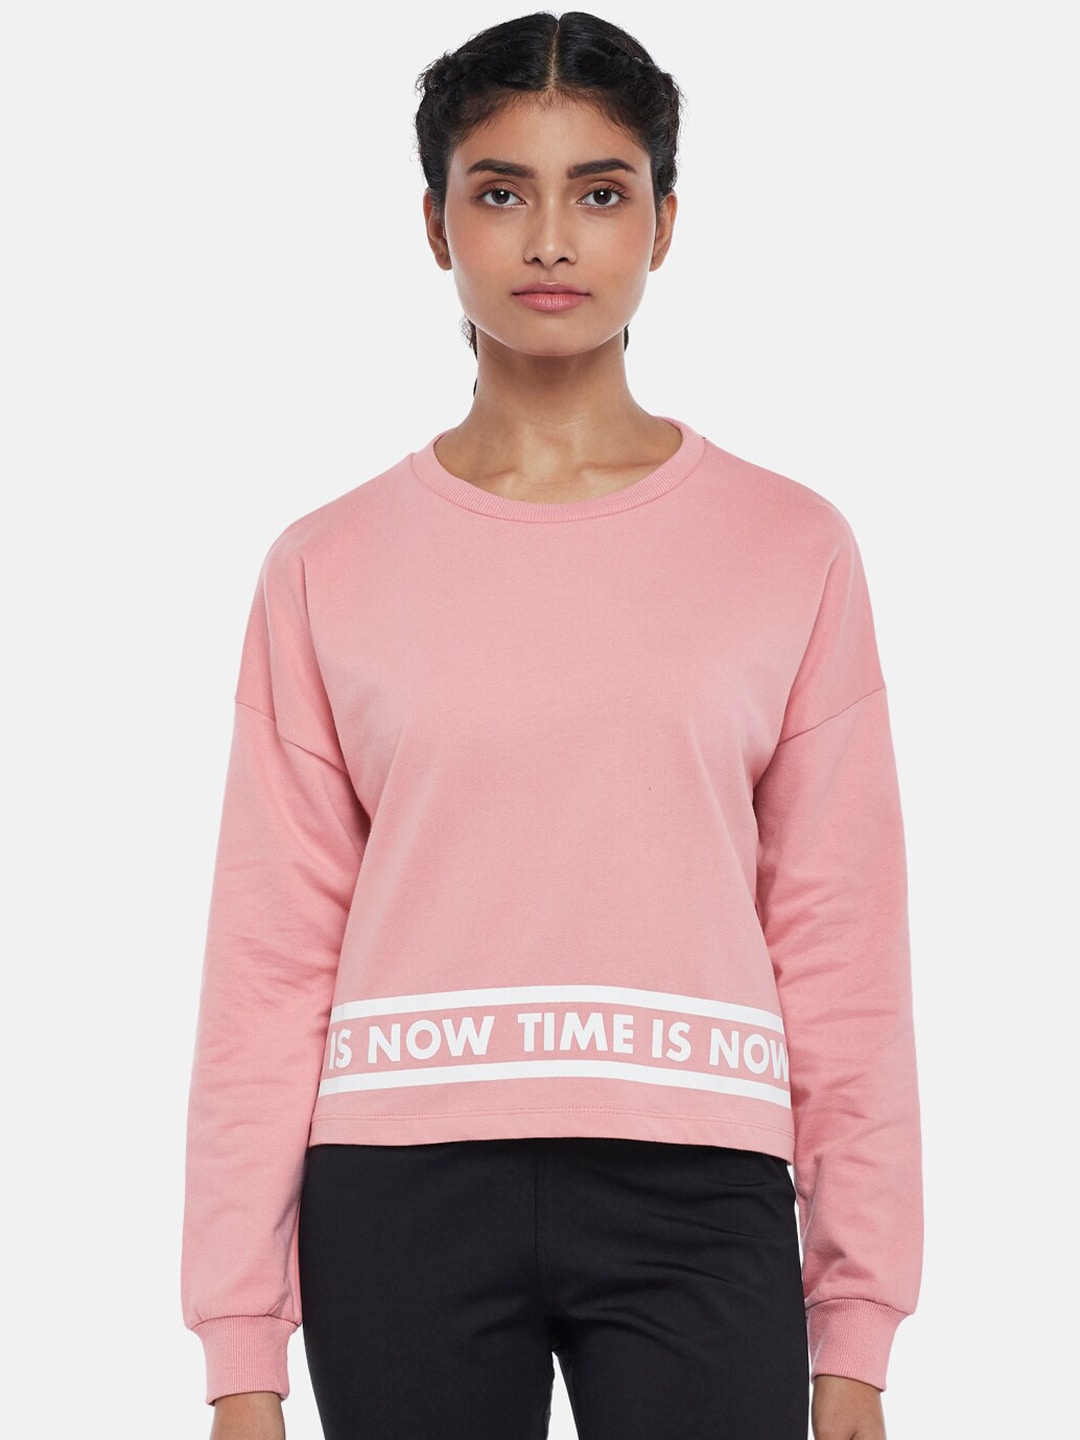 Ajile by Pantaloons Women Pink Printed Sweatshirt Price in India